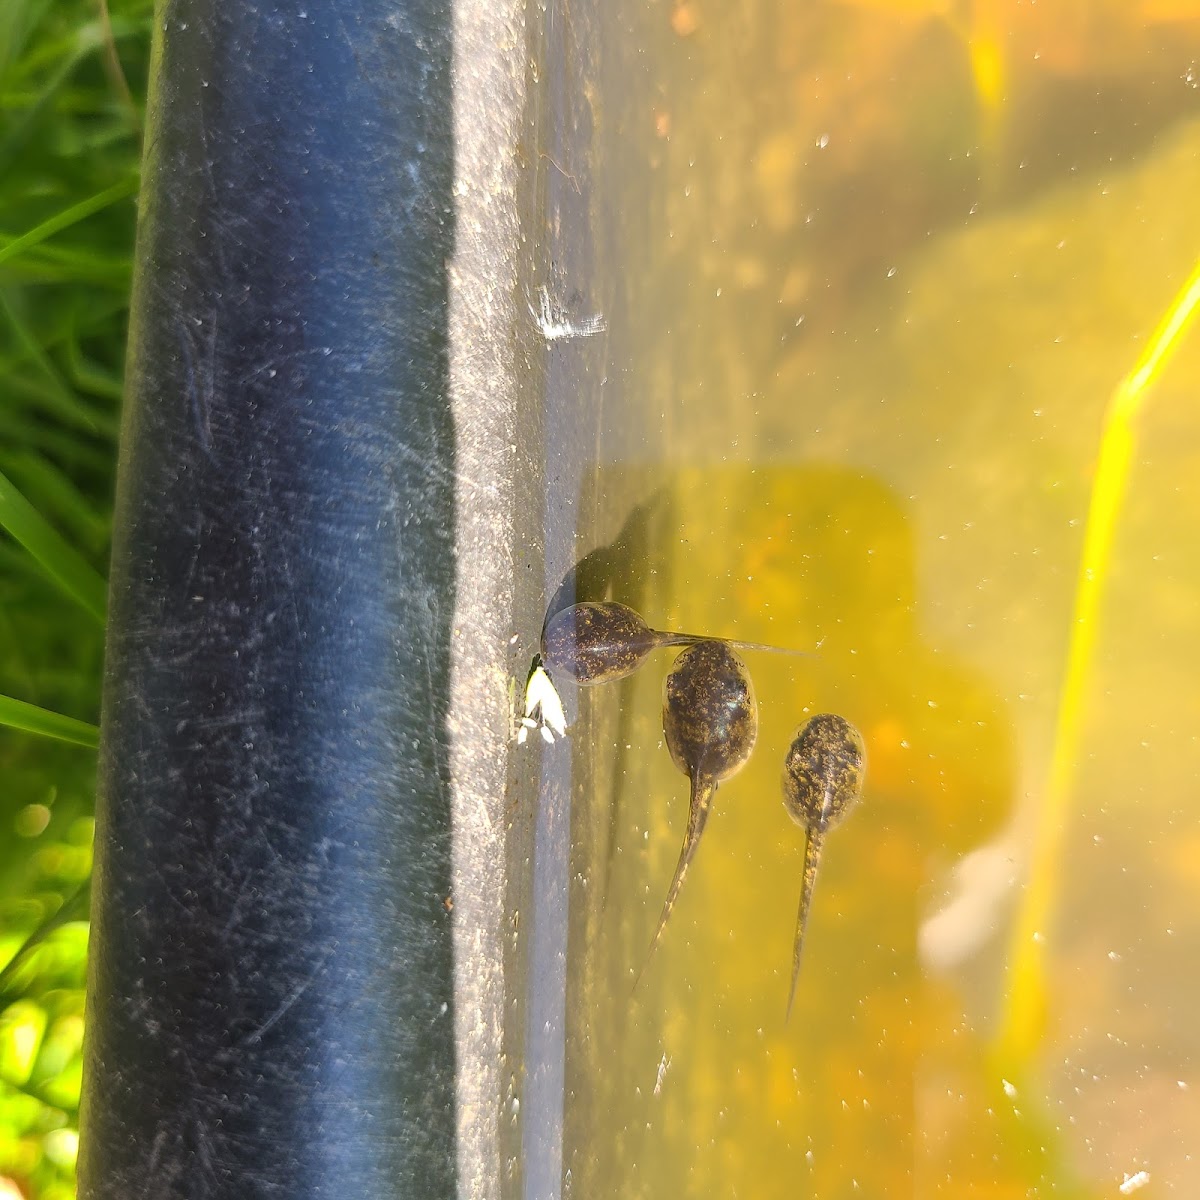 Pacific Tree frog tadpoles